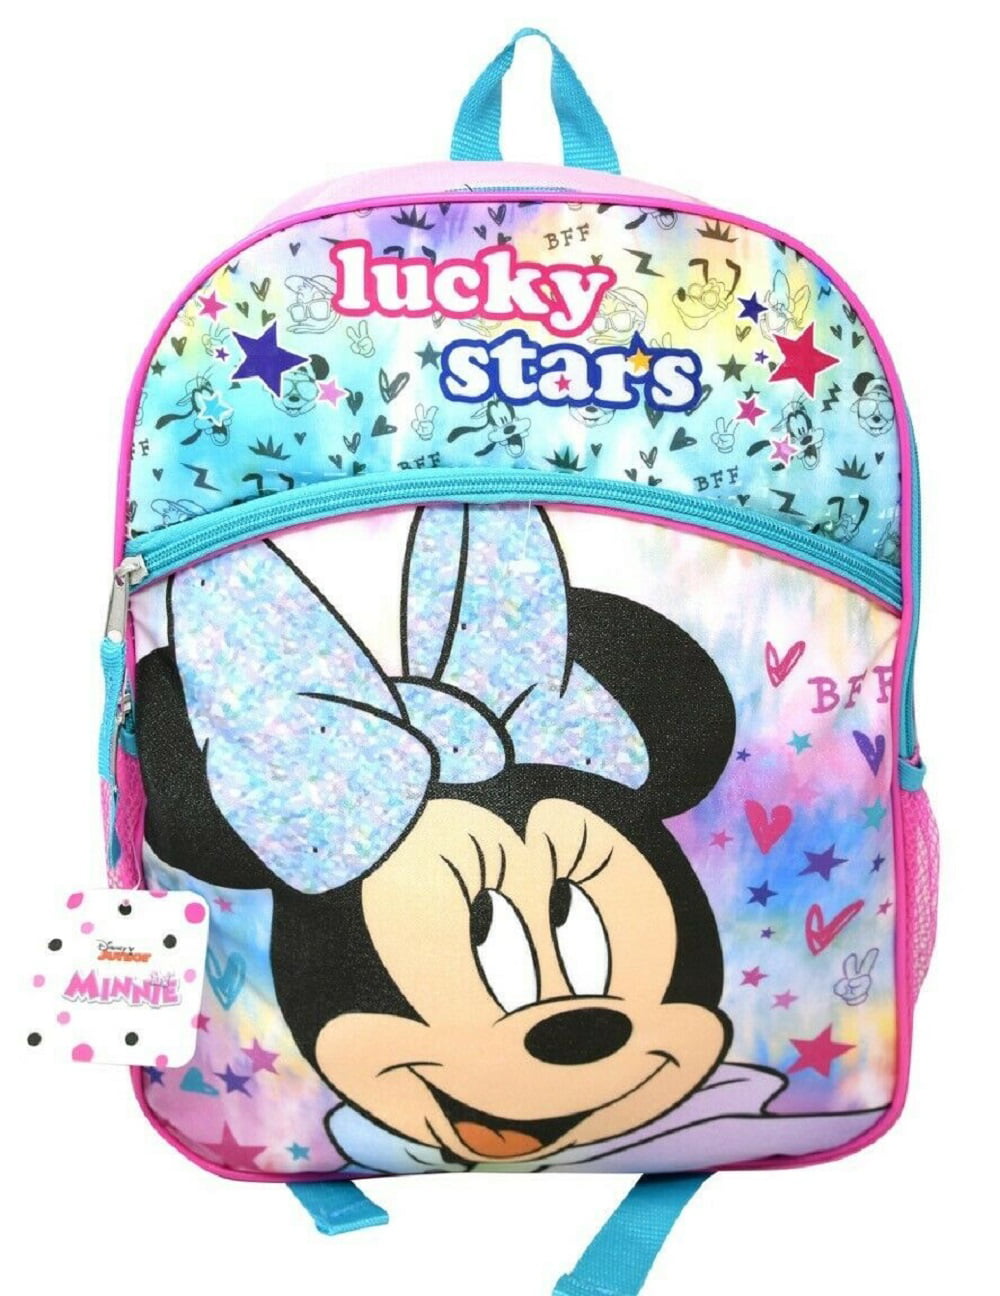 Disney Minnie Mouse Flamingo Backpack School Bag Travel Rucksack Kids Lunch Bag 